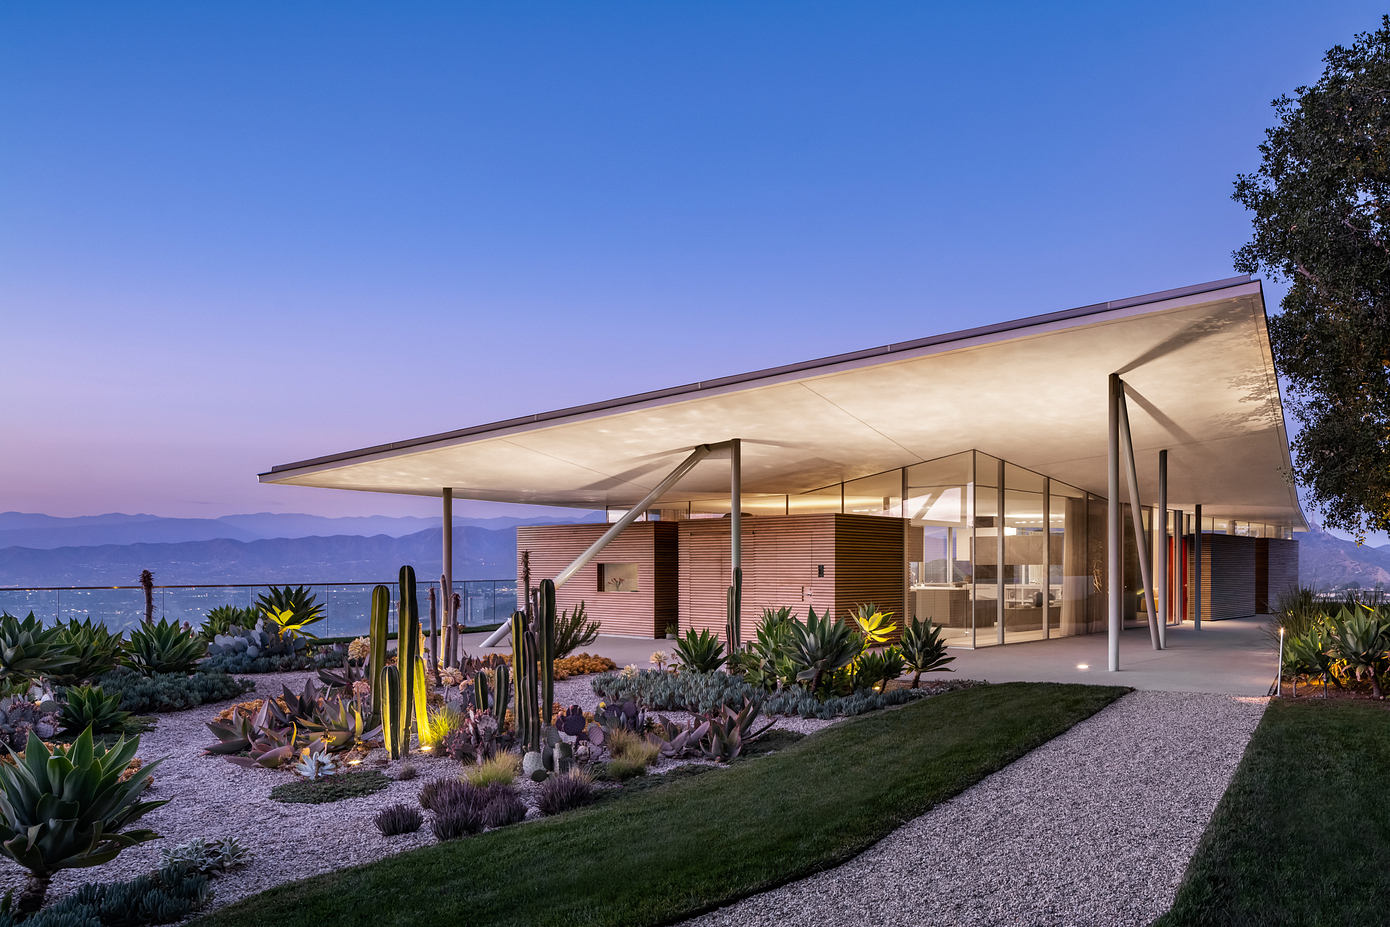 California House: GLUCK+ Architects’ Hillside Masterpiece in LA